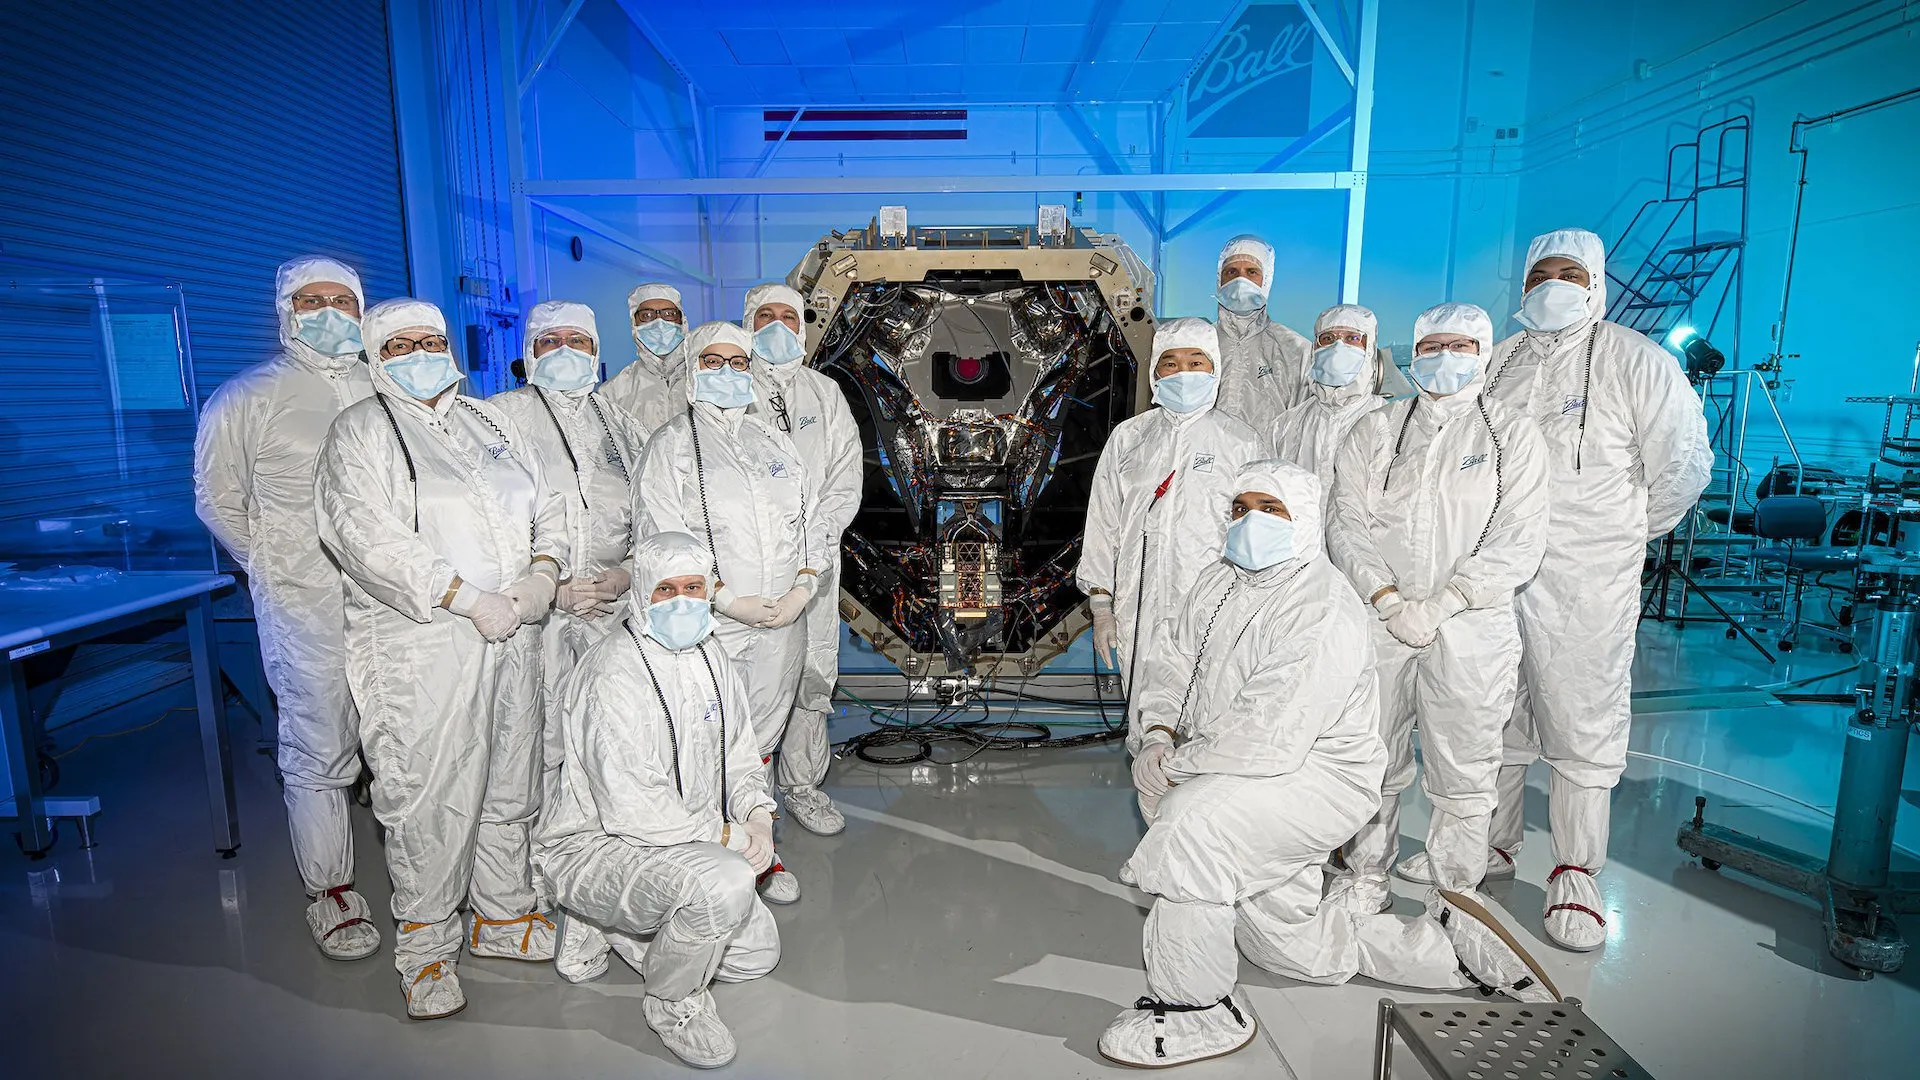 NASA Goddard team members pose with part of the Nancy Grace Roman Telescope. Image: NASA/Flickr